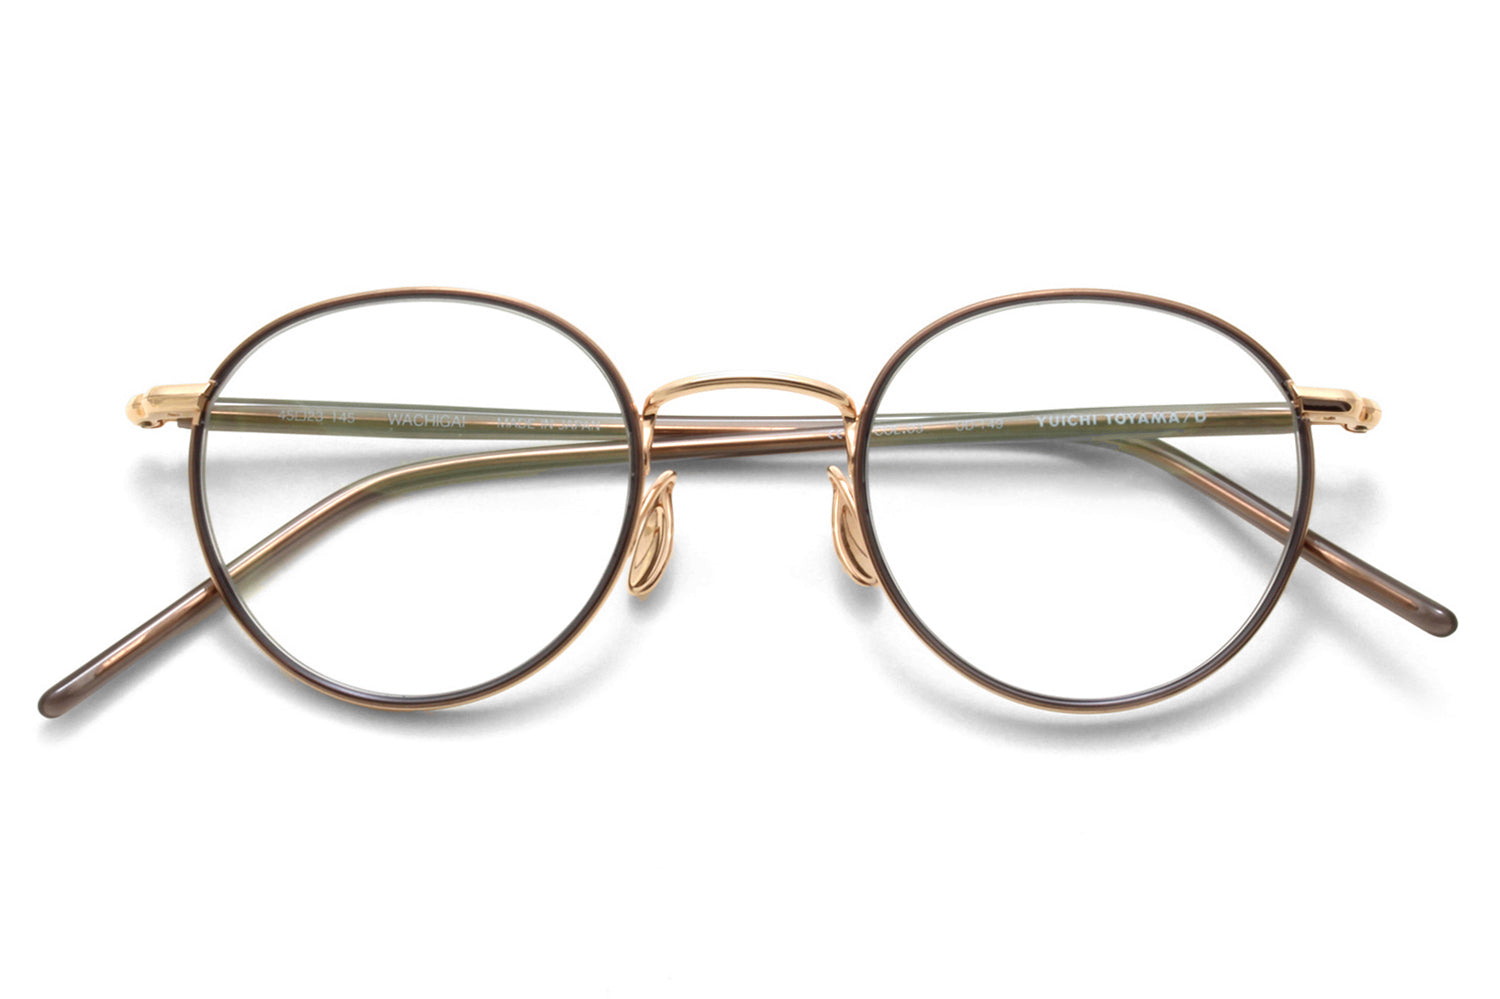 Yuichi Toyama - Wachigai (UD-149) Eyeglasses | Specs Collective